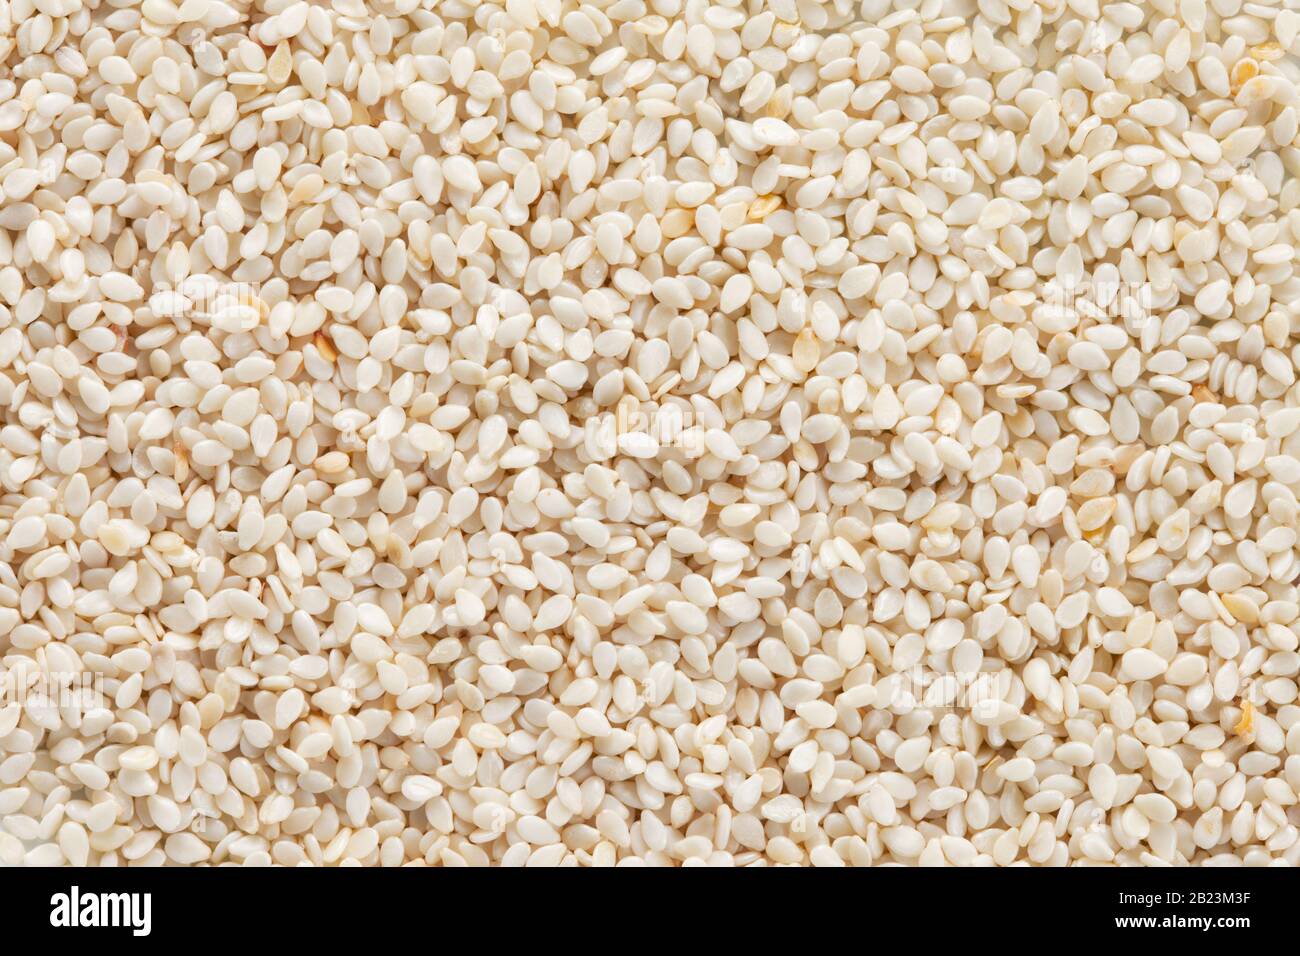 Sesame seeds (Sesamum indicum)  texture, full frame background. Stock Photo